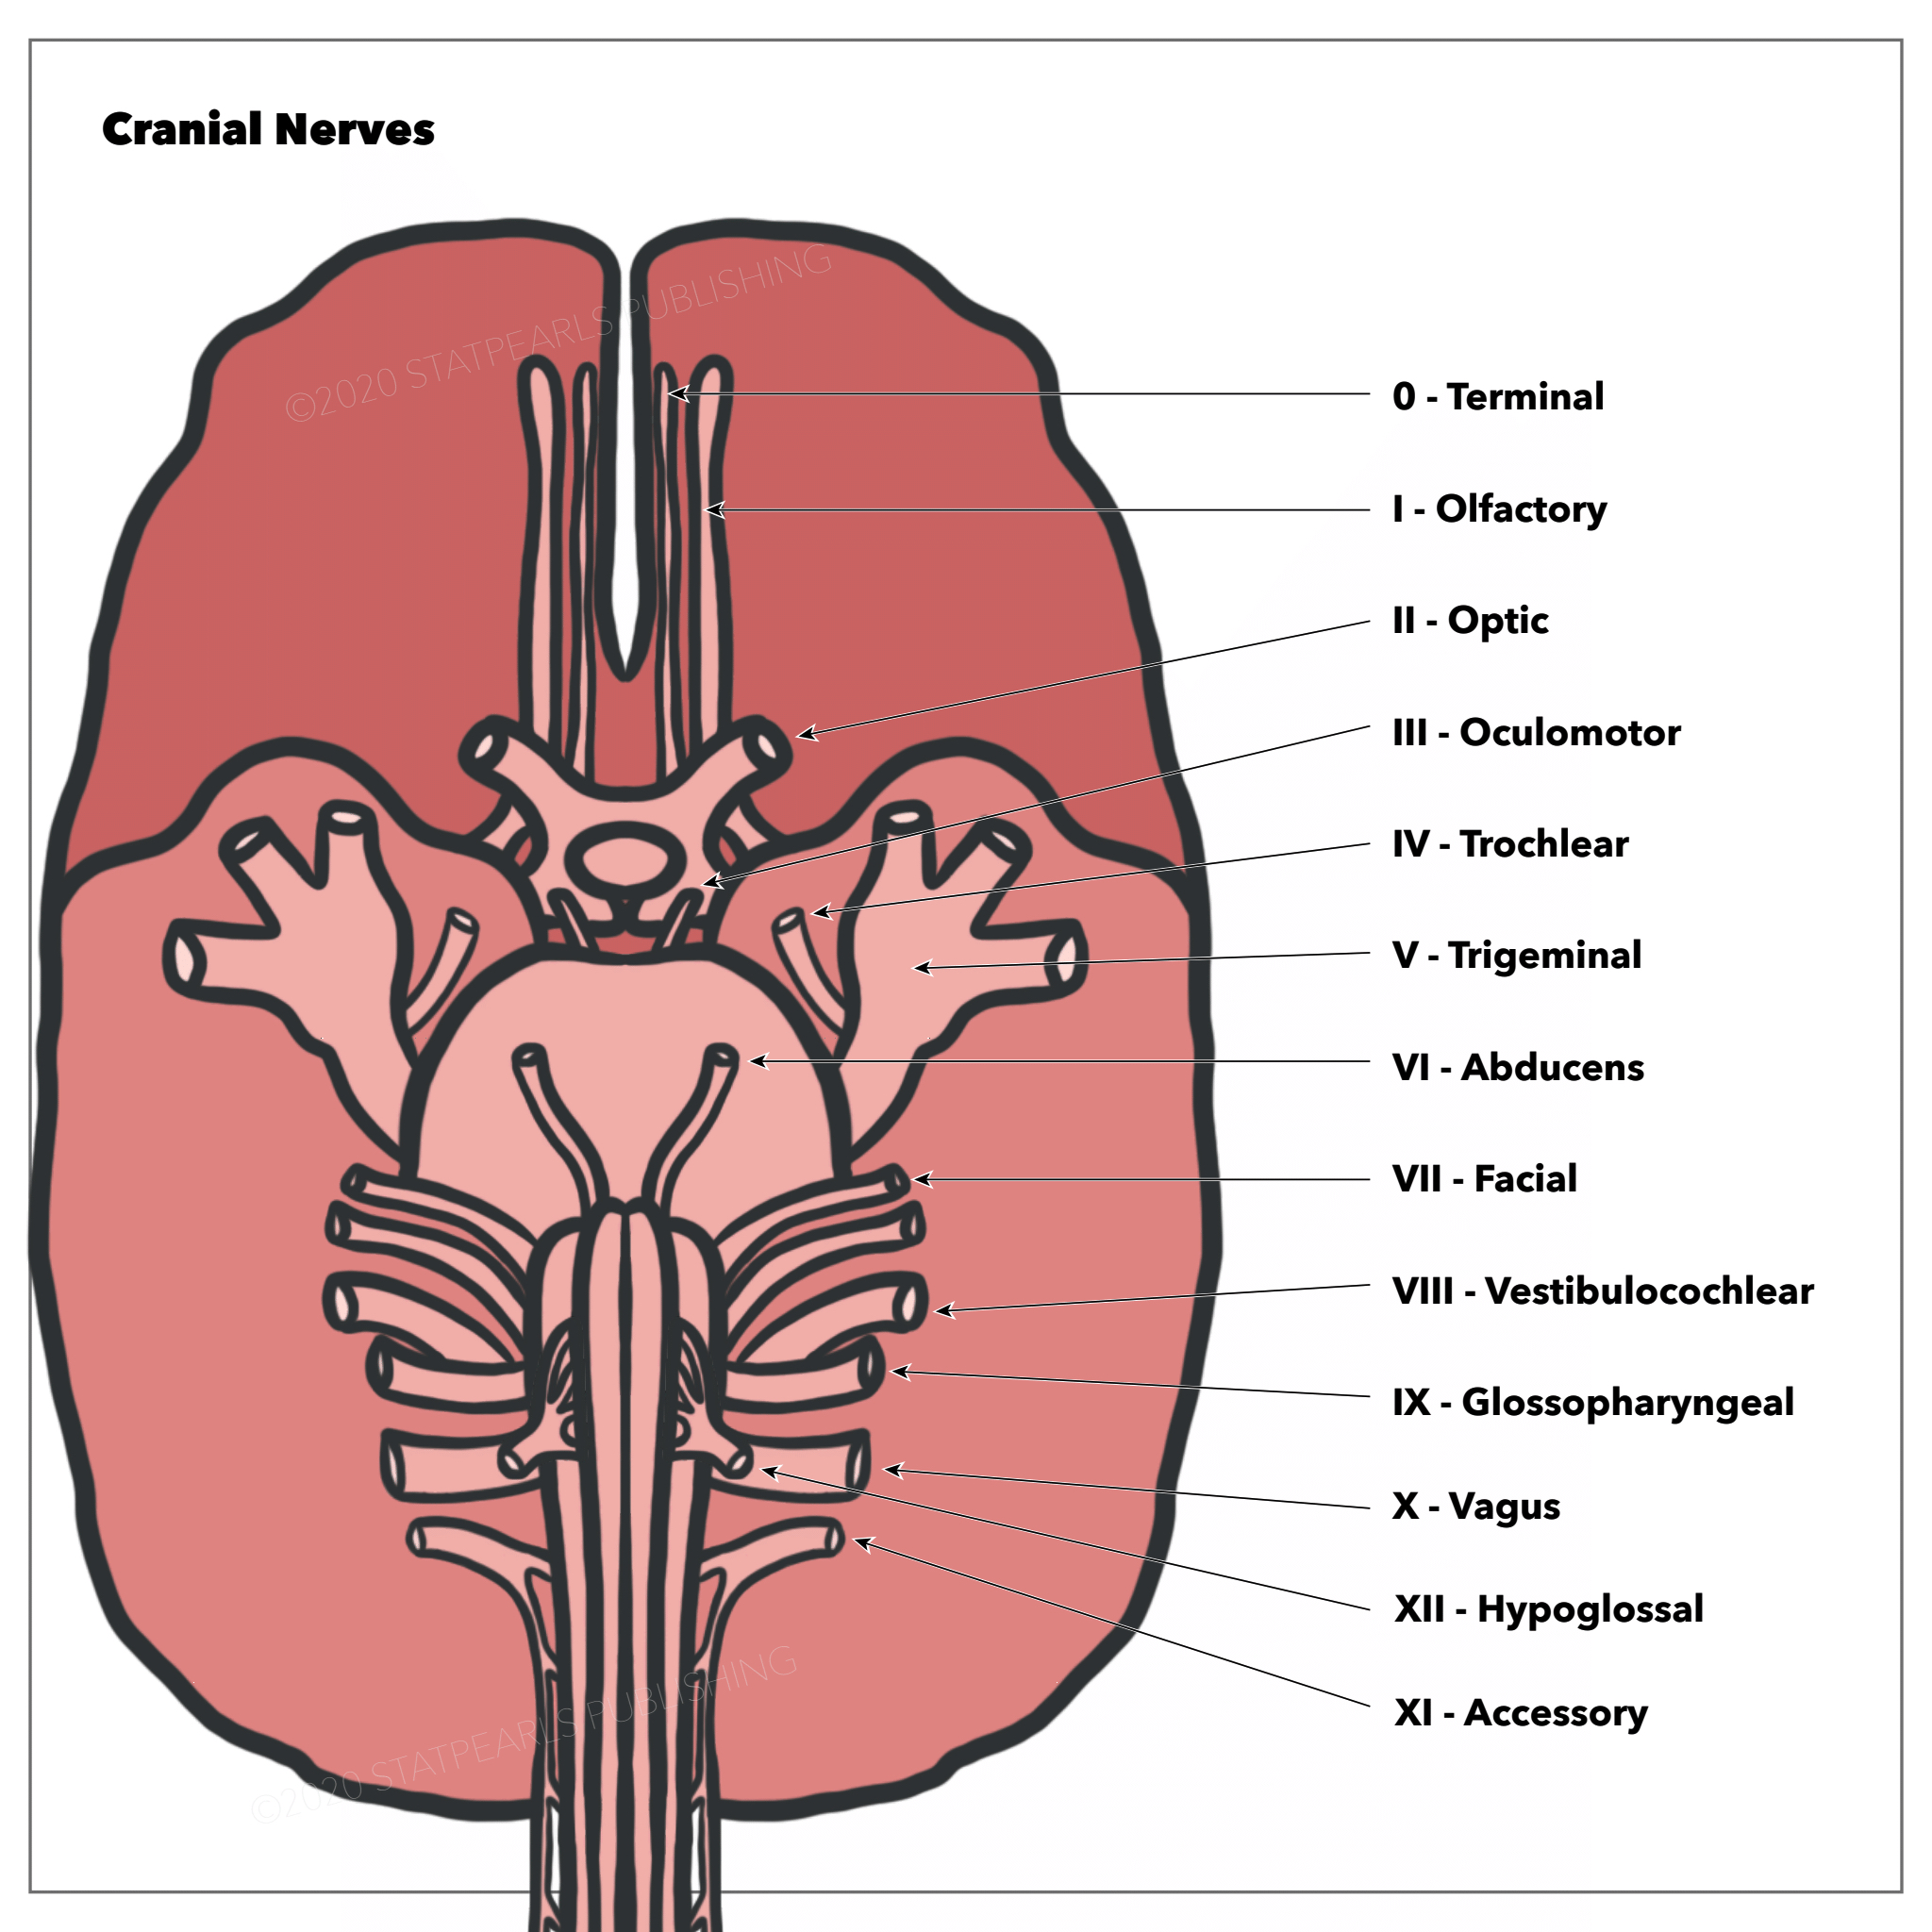 Cranial Nerves, Terminal, Olfactory, Optic, Oculomotor, Trochlear, Trigeminal, Abducens, Facial, Vestibulocochlear, Glossopha